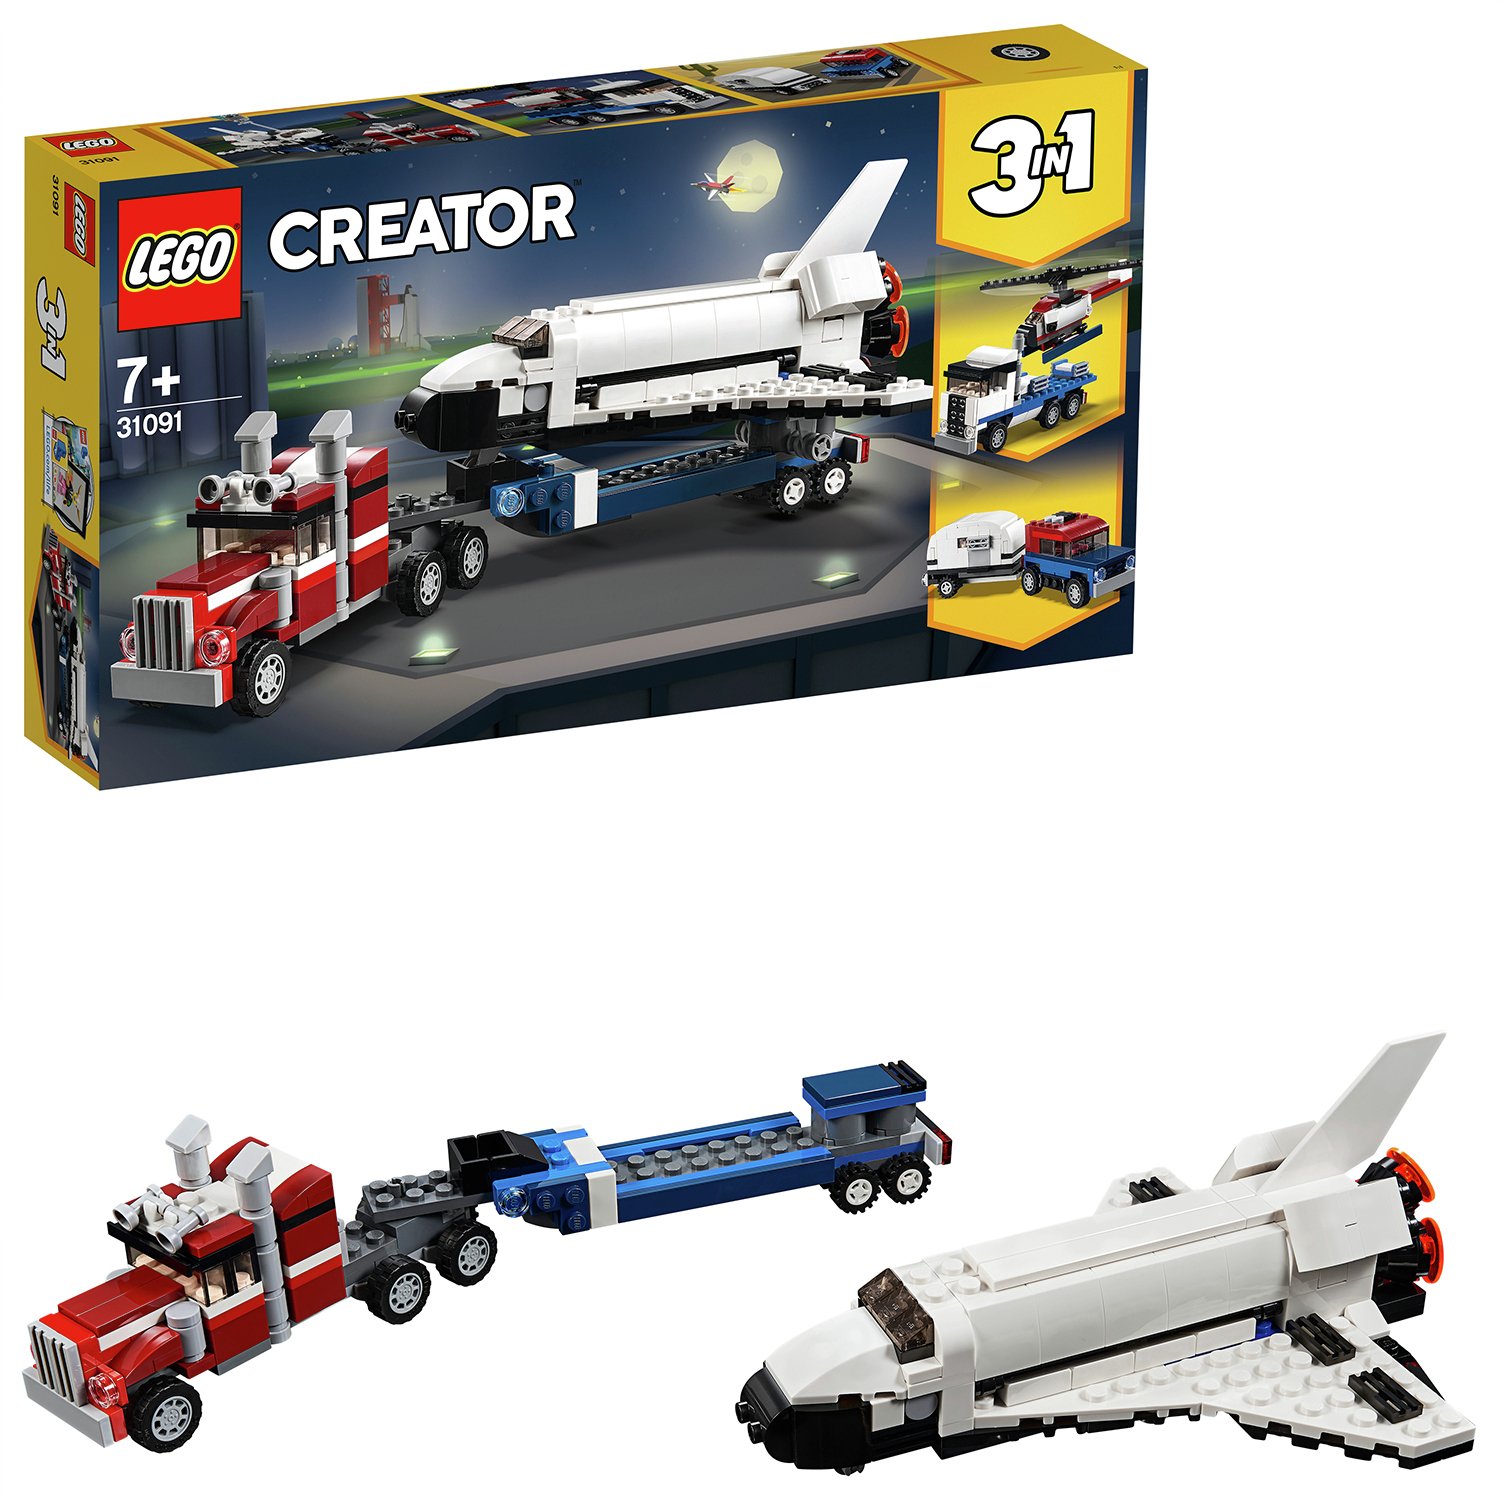 LEGO Creator 3-in-1 Shuttle Transporter Building Set - 31091